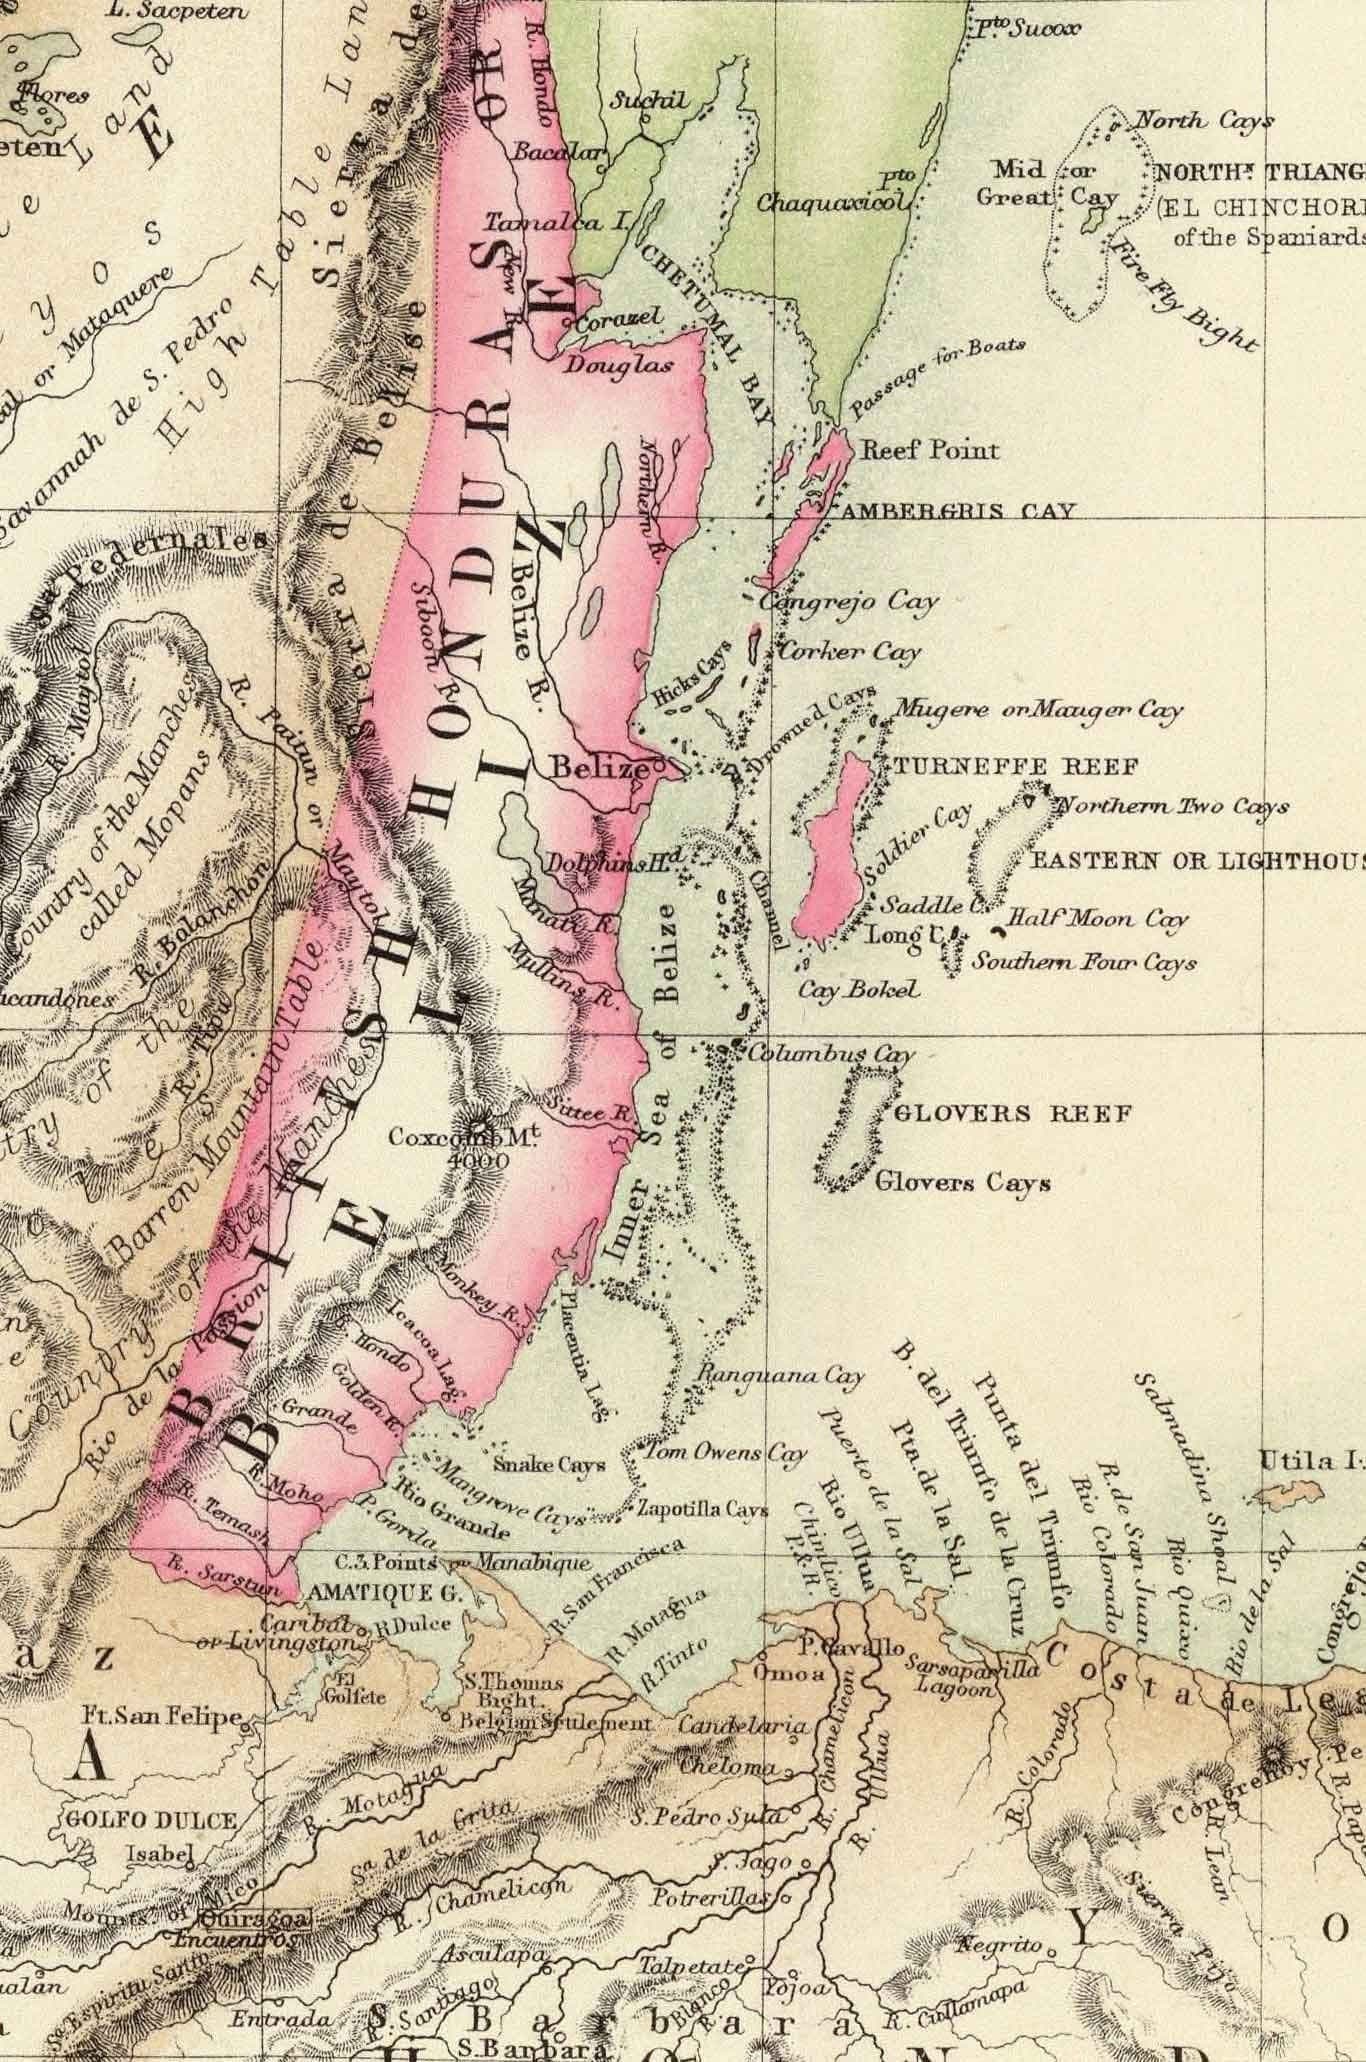 Alte Karte von Zentralamerika & Maya-Städte und Ruinen, 1872 von Fullarton - Panama, Costa Rica, Nicaragua, Guatemala, Belize